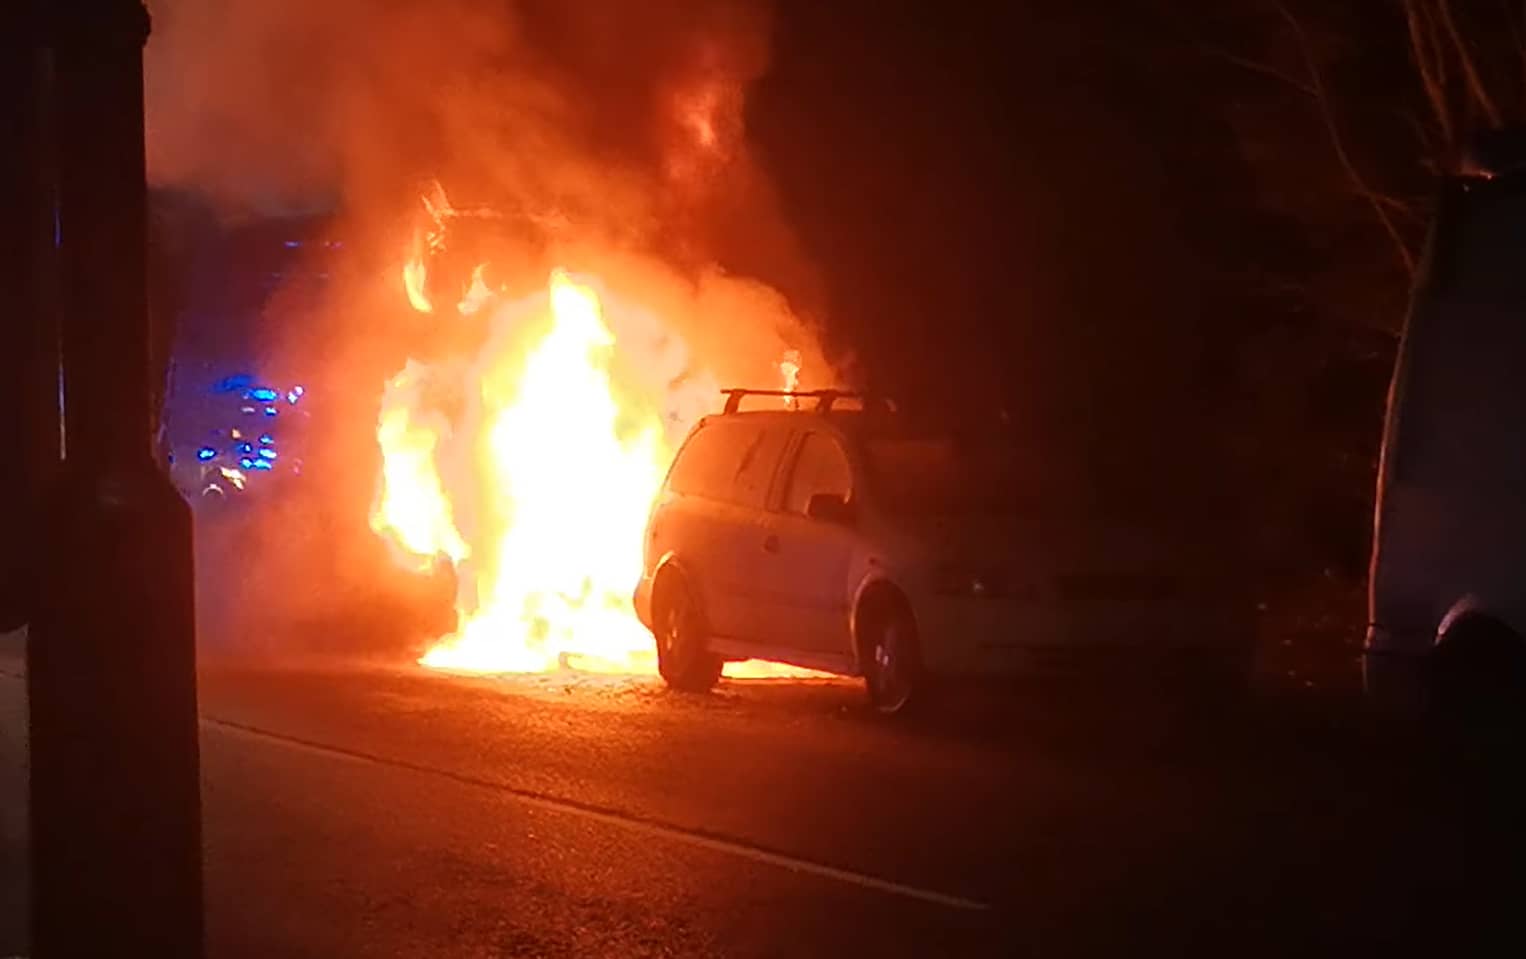 Van on fire, captured by John Cattle